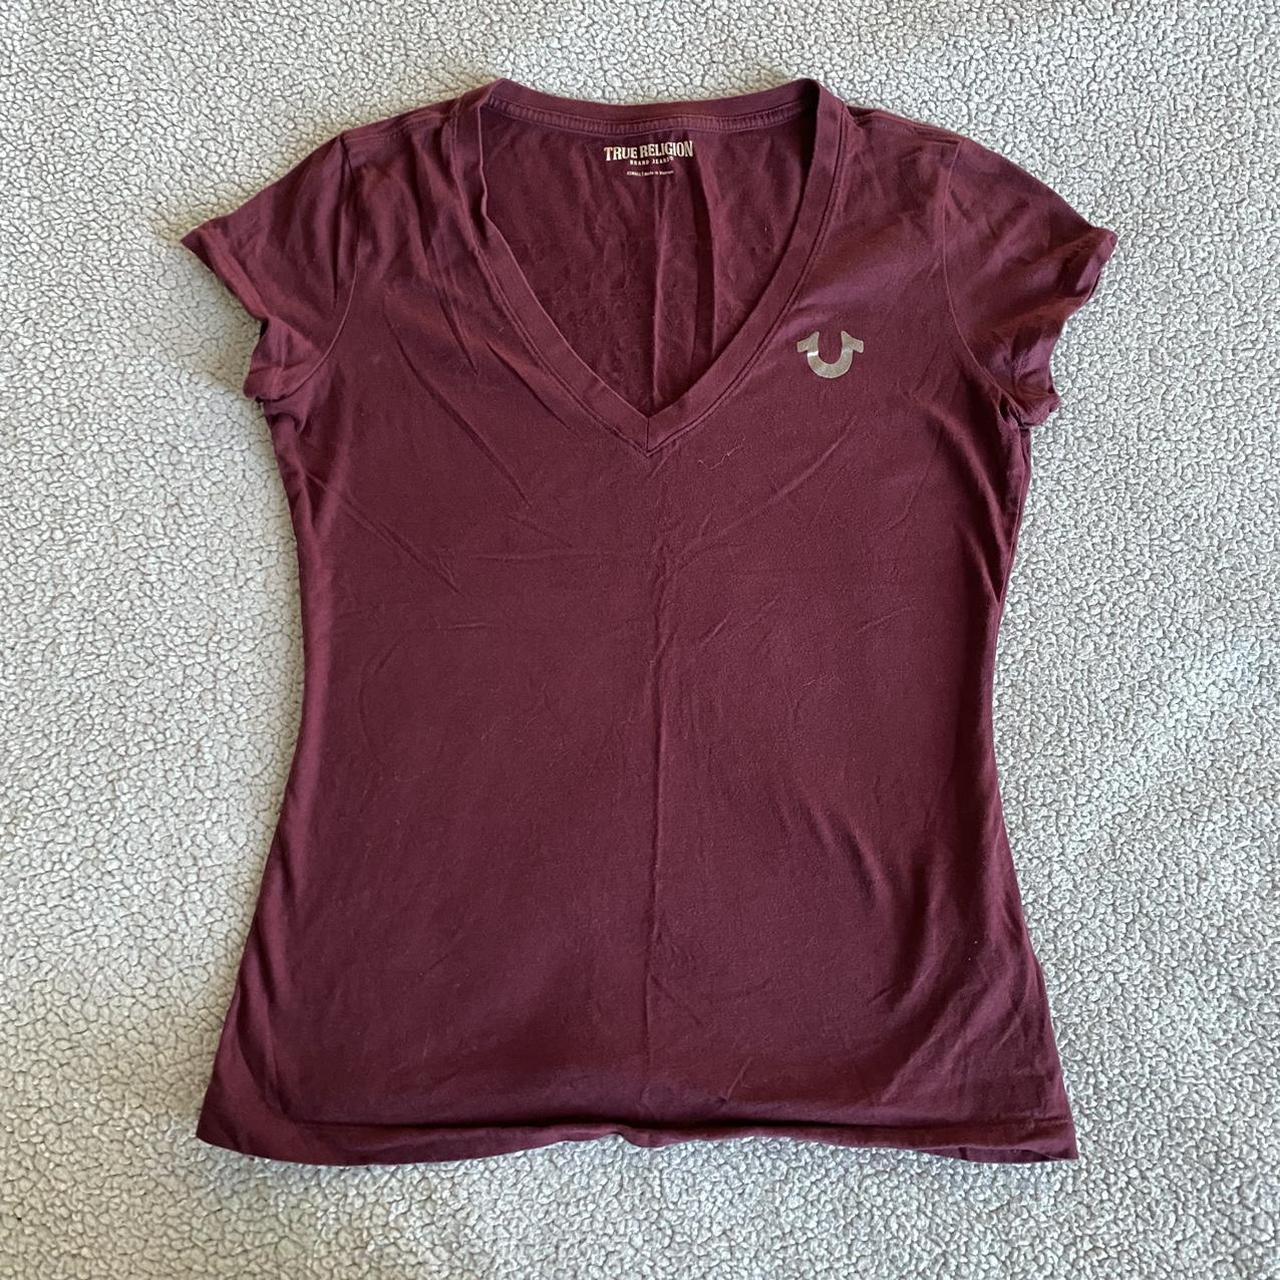 True Religion Women's Burgundy Shirt | Depop